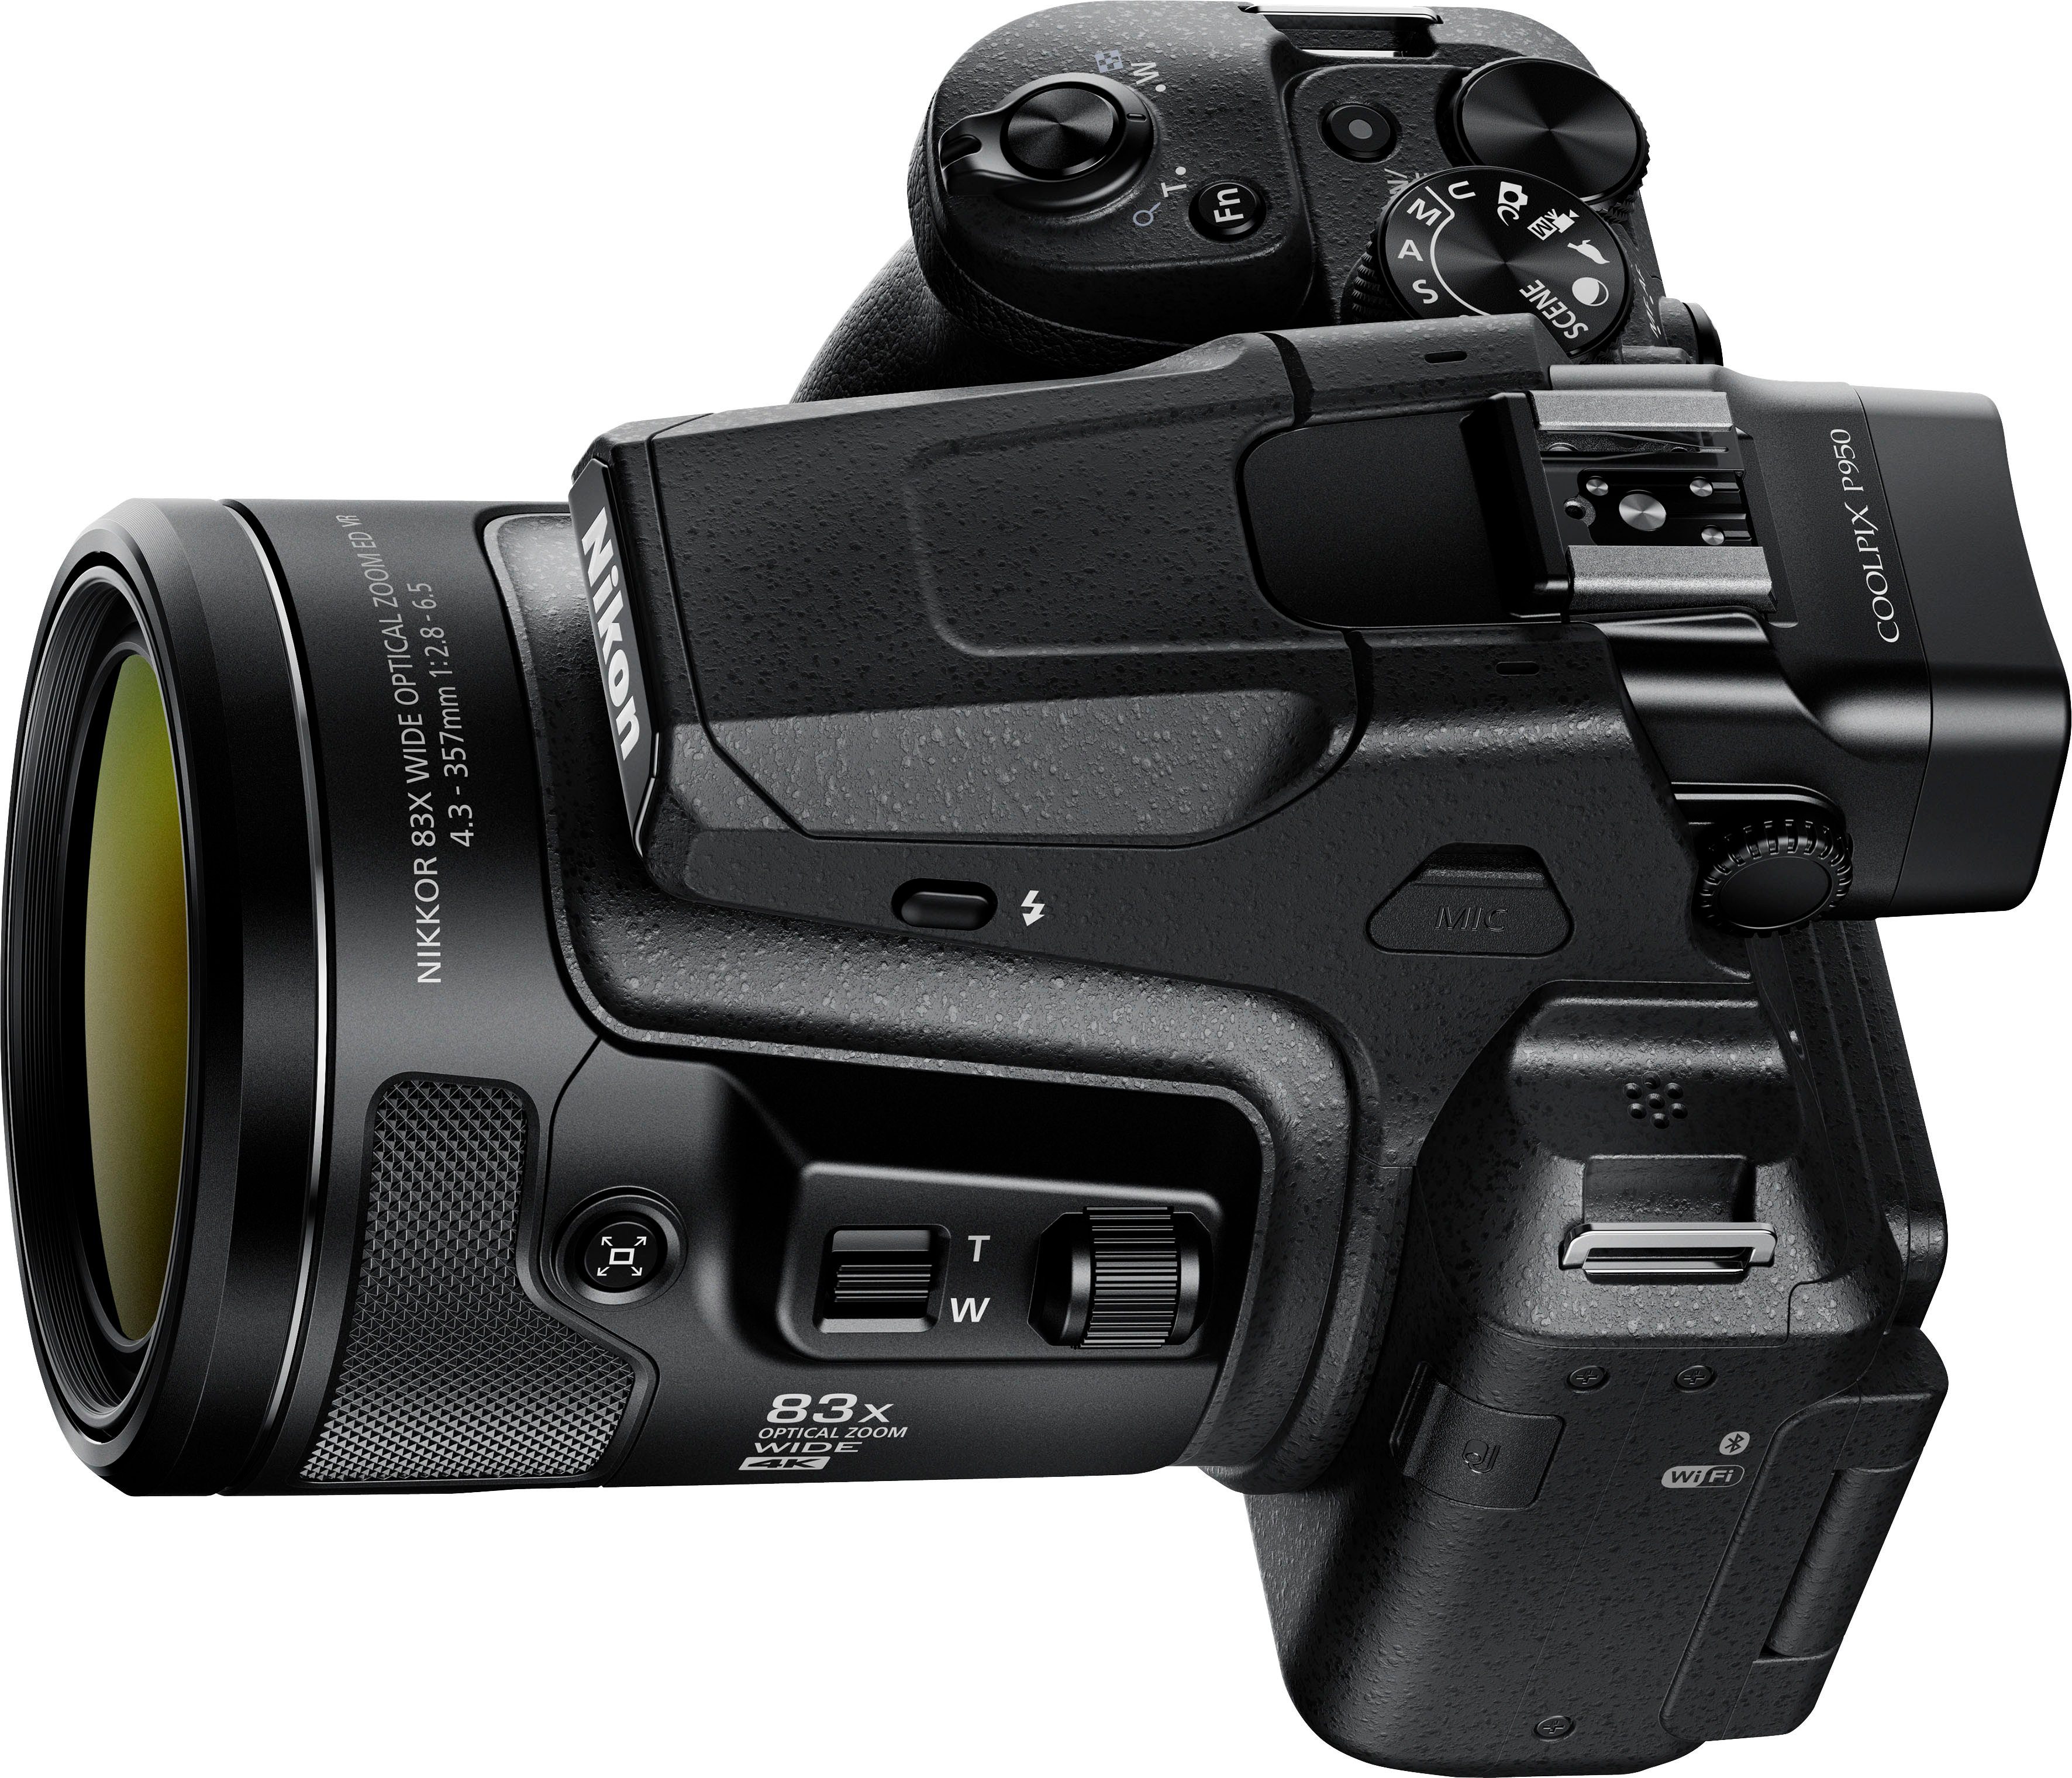 Zoom, (WiFi) opt. Nikon WLAN Bluetooth, 83x Coolpix Bridge-Kamera MP, P950 (16